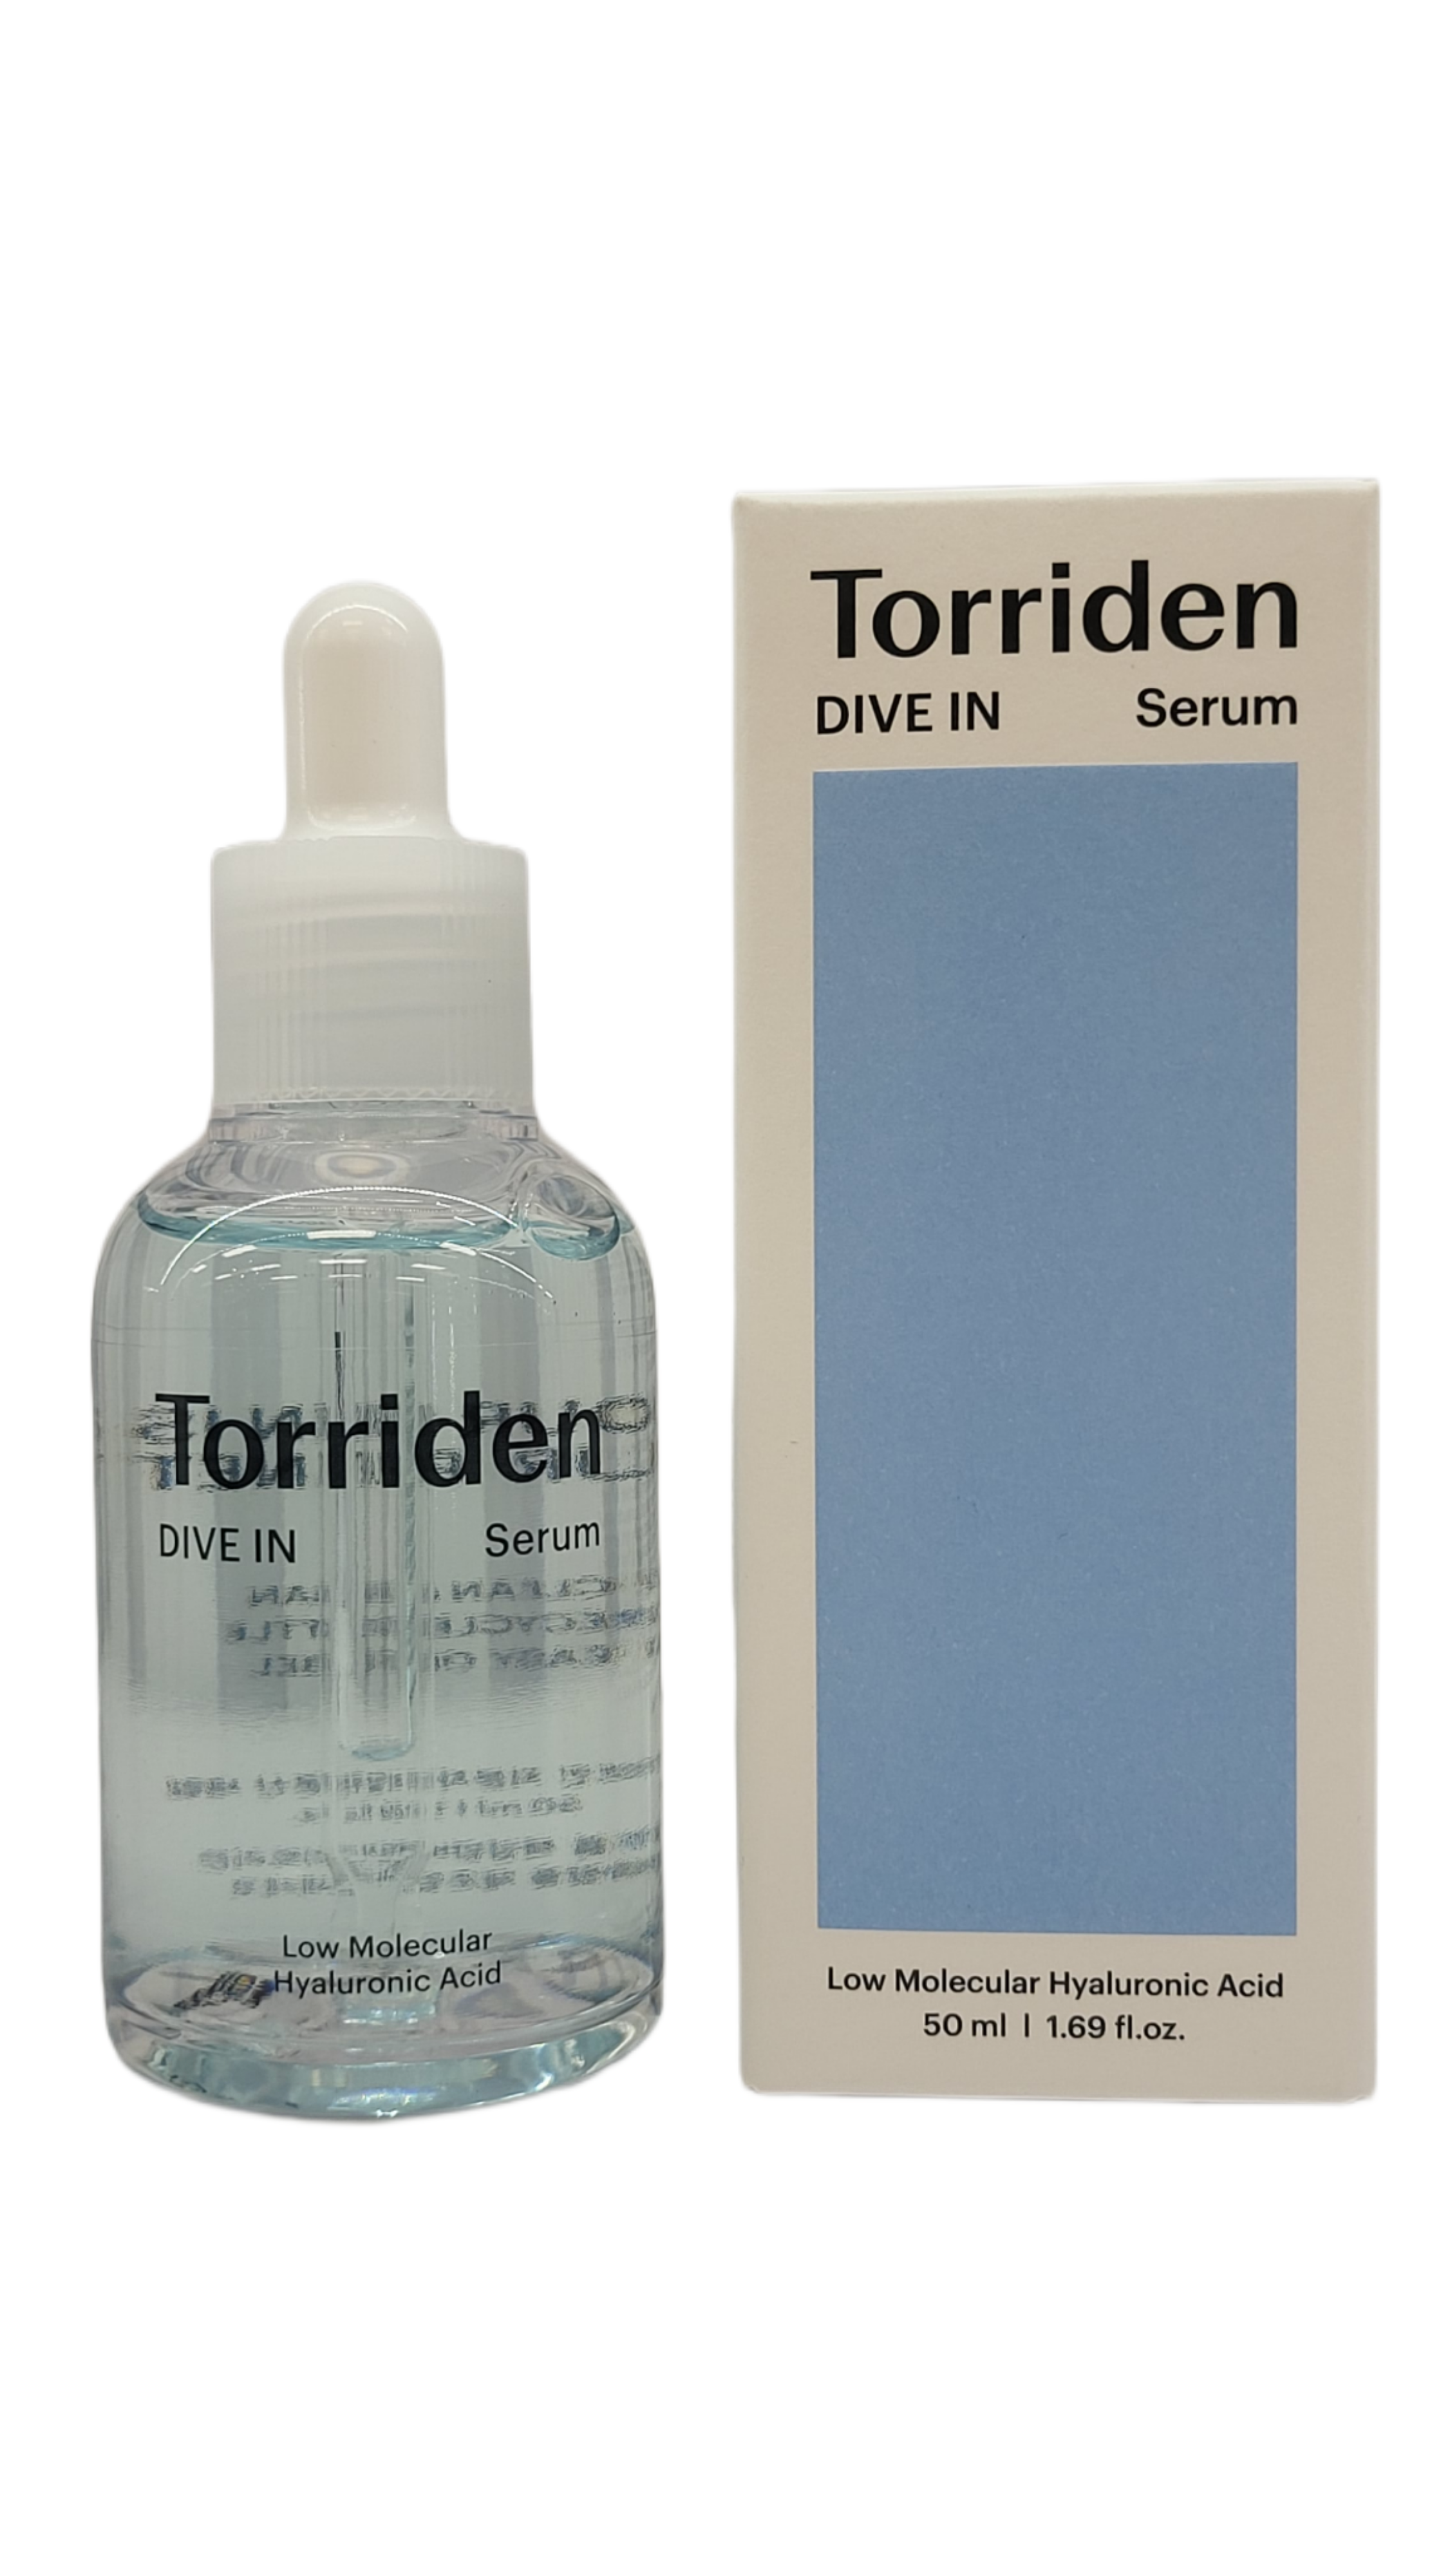 TORRIDEN Dive-in Low Molecular Hyaluronic Acid Serum 50ml